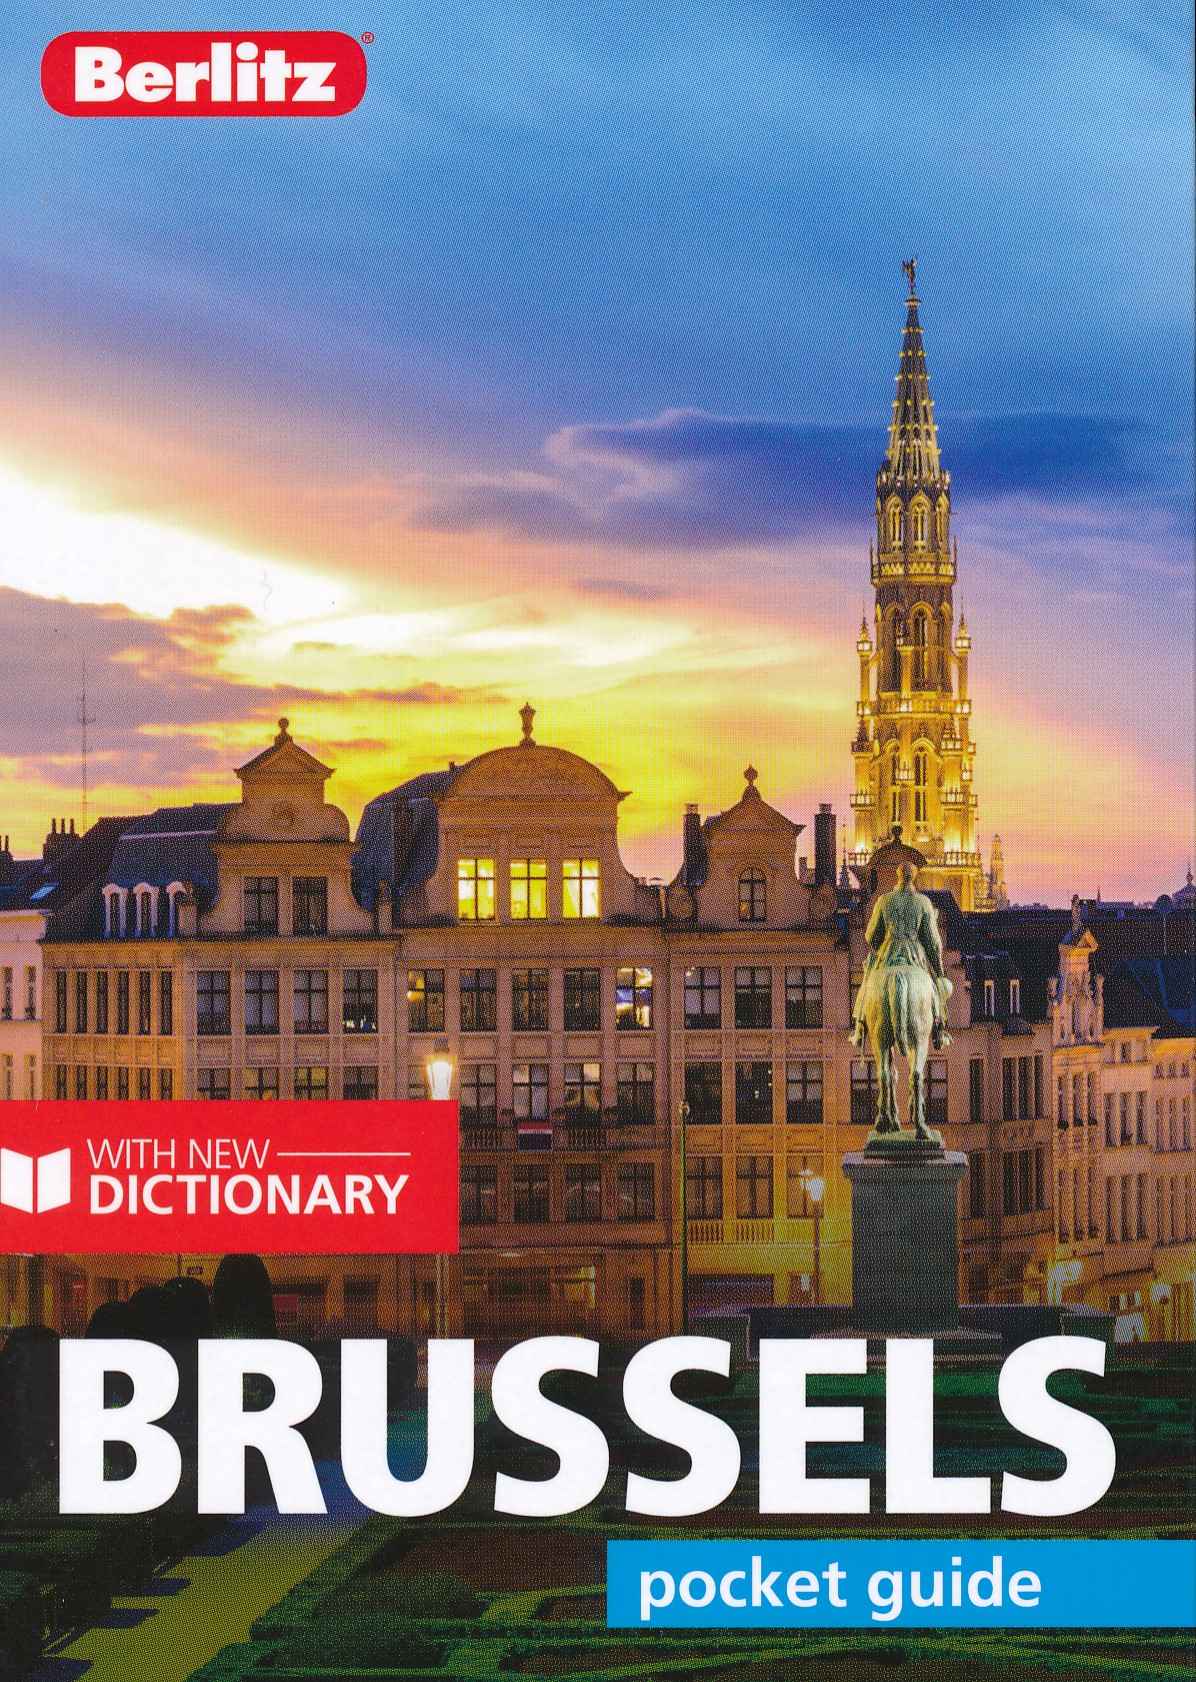 Online bestellen: Reisgids Pocket Guide Brussels - Brussel | Berlitz